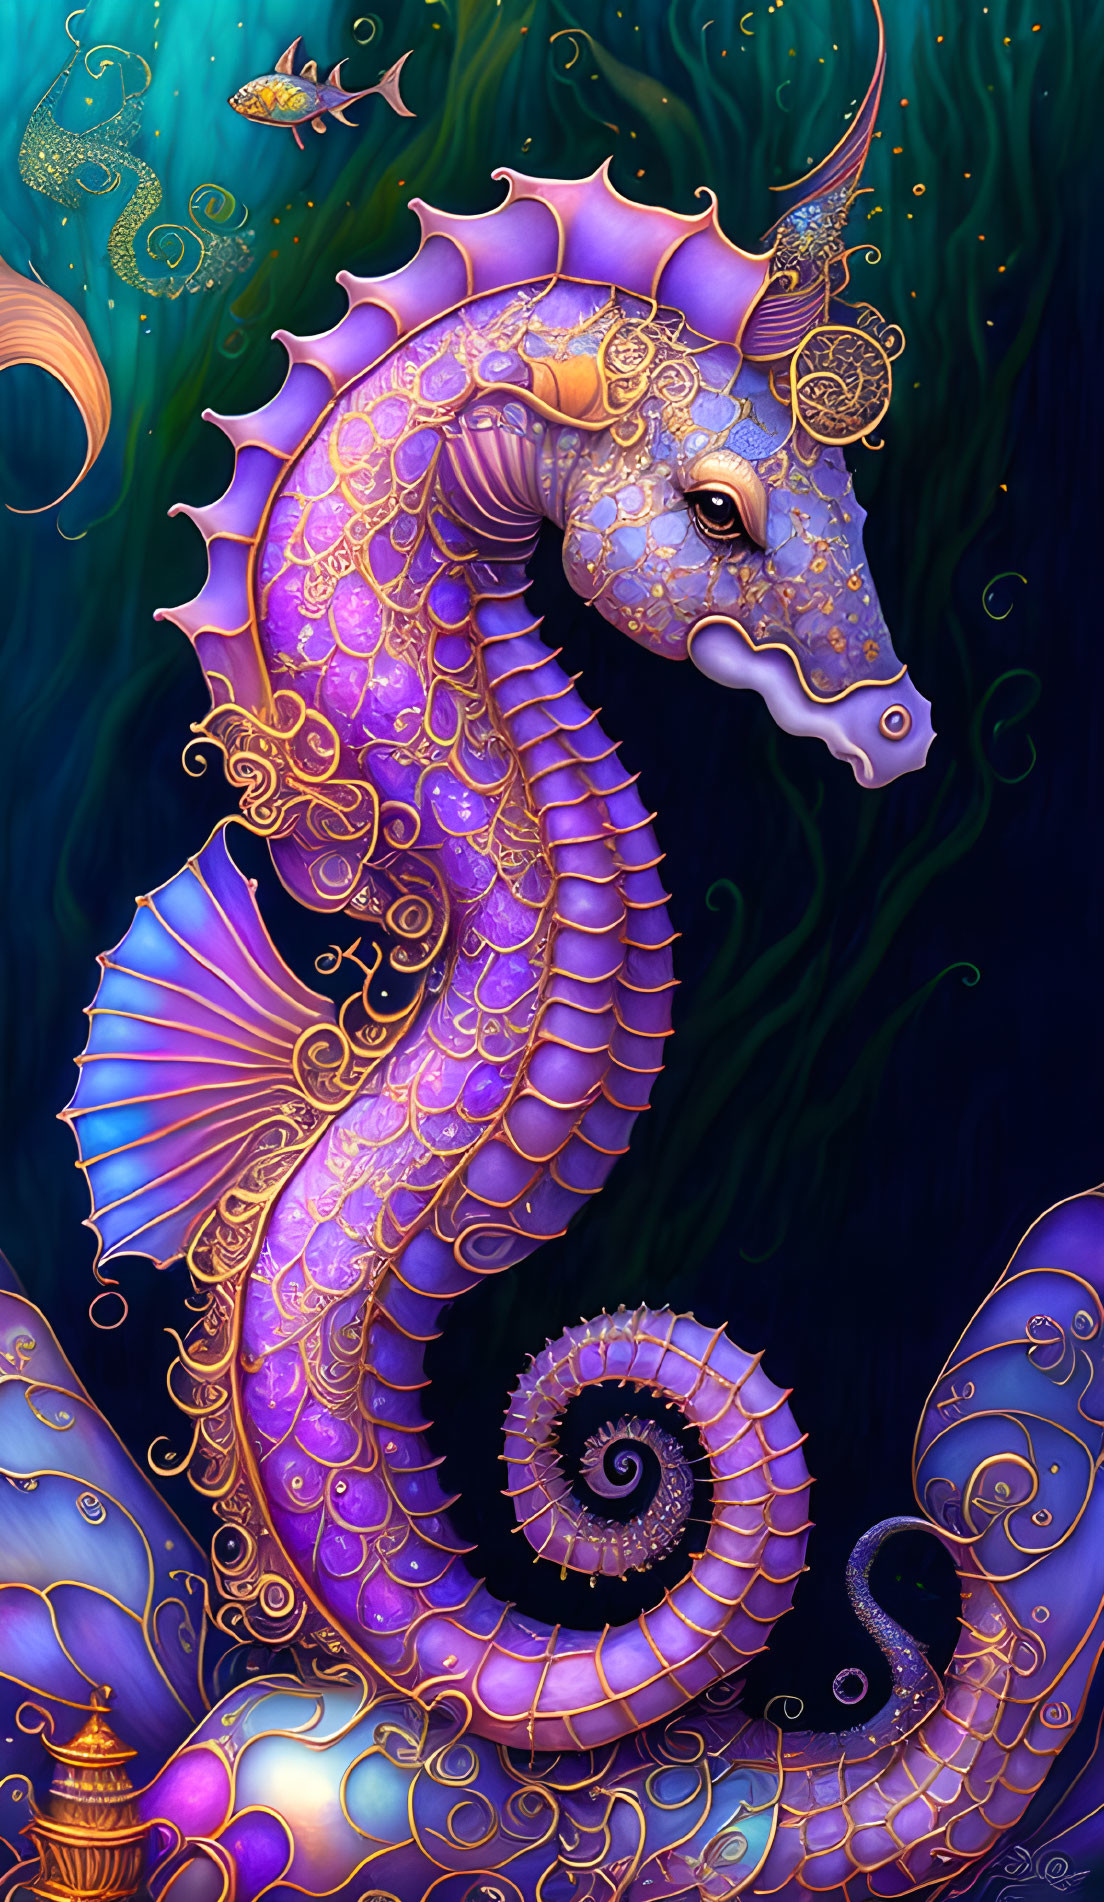 Colorful Mythical Seahorse Digital Illustration on Dark Marine Background